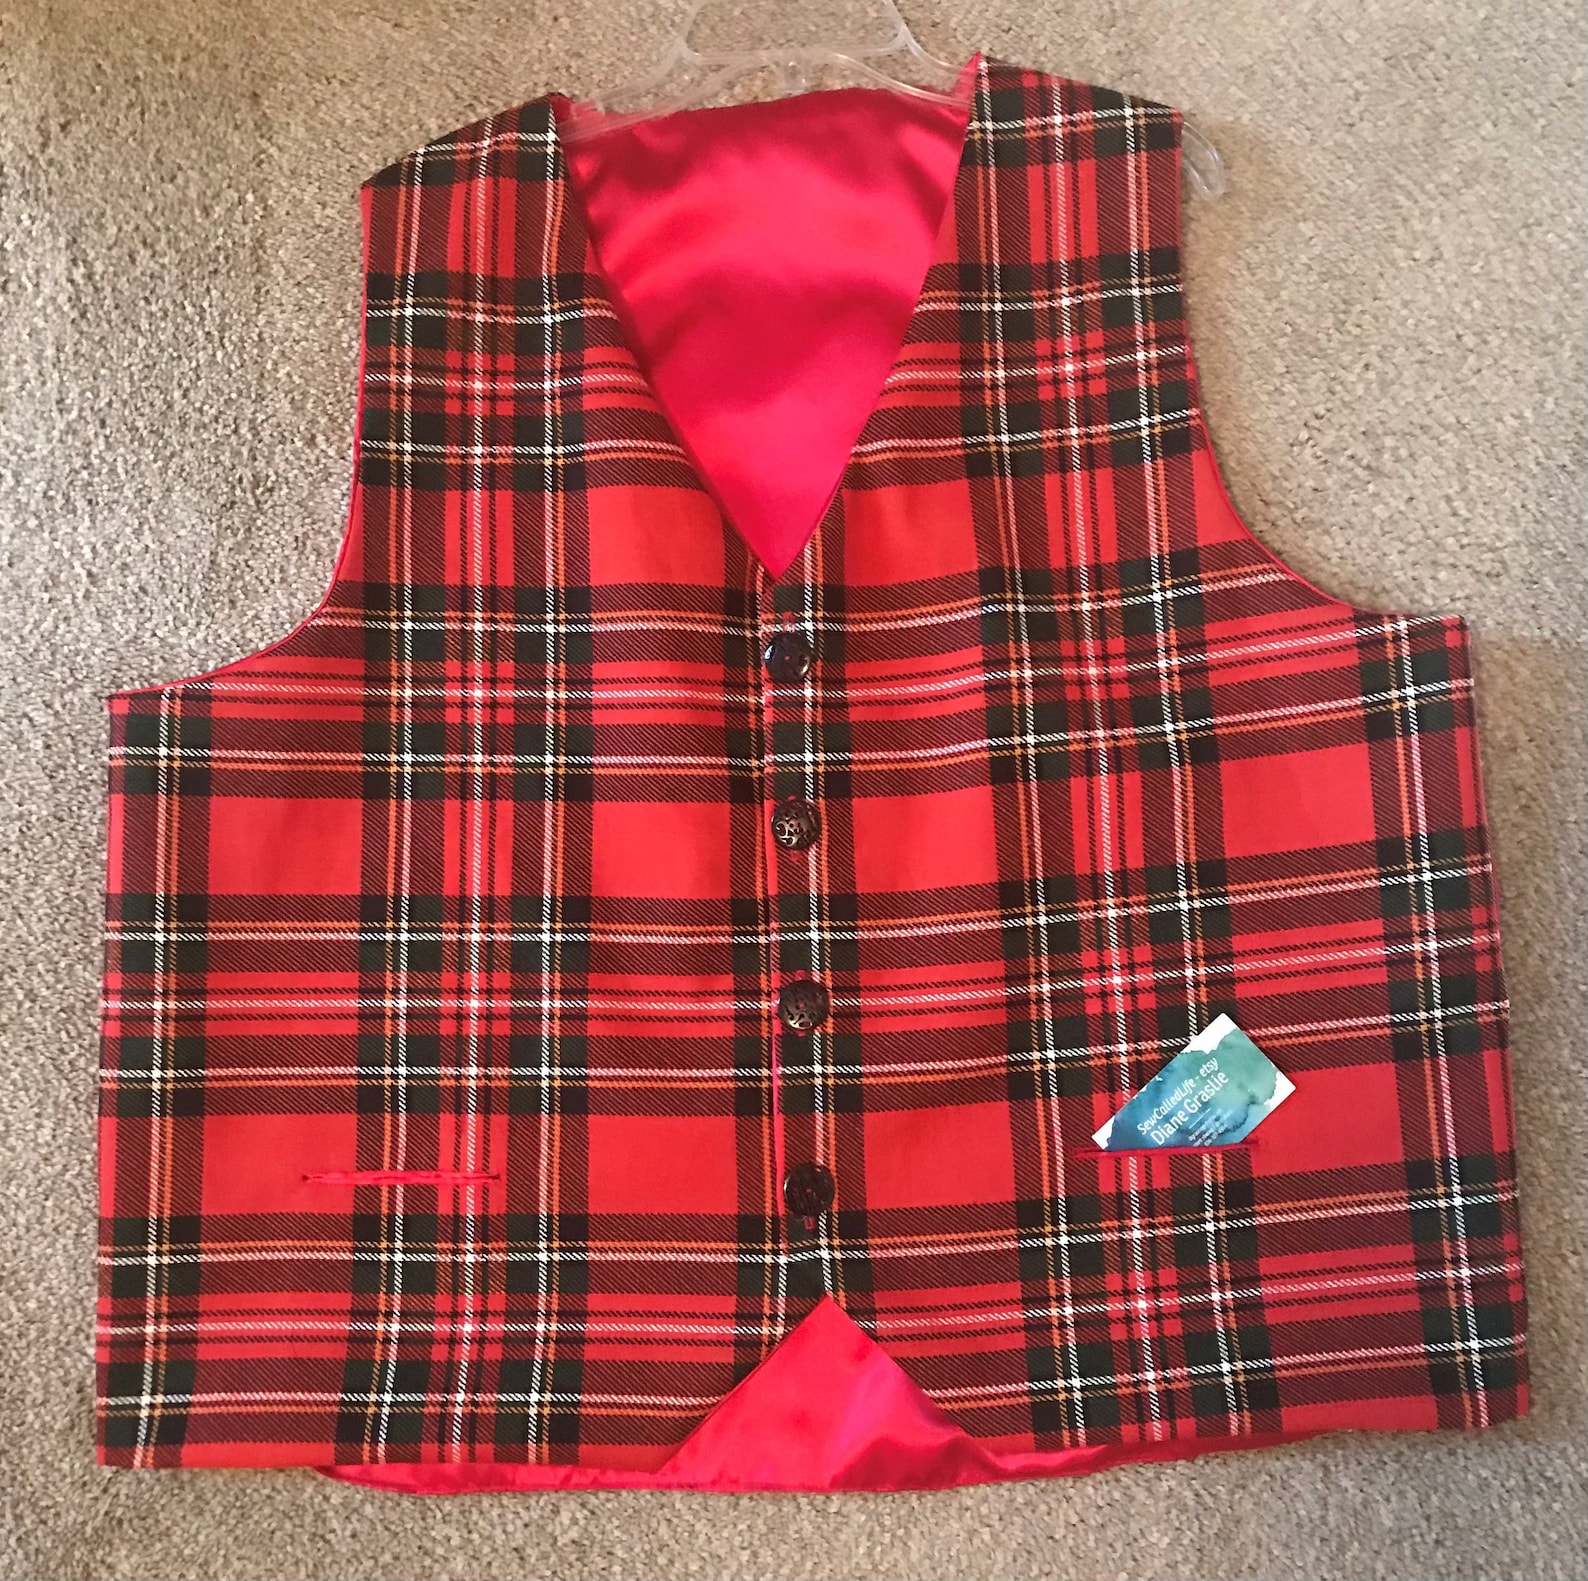 Christmas Red plaid vest for Santa custom made unique | Etsy